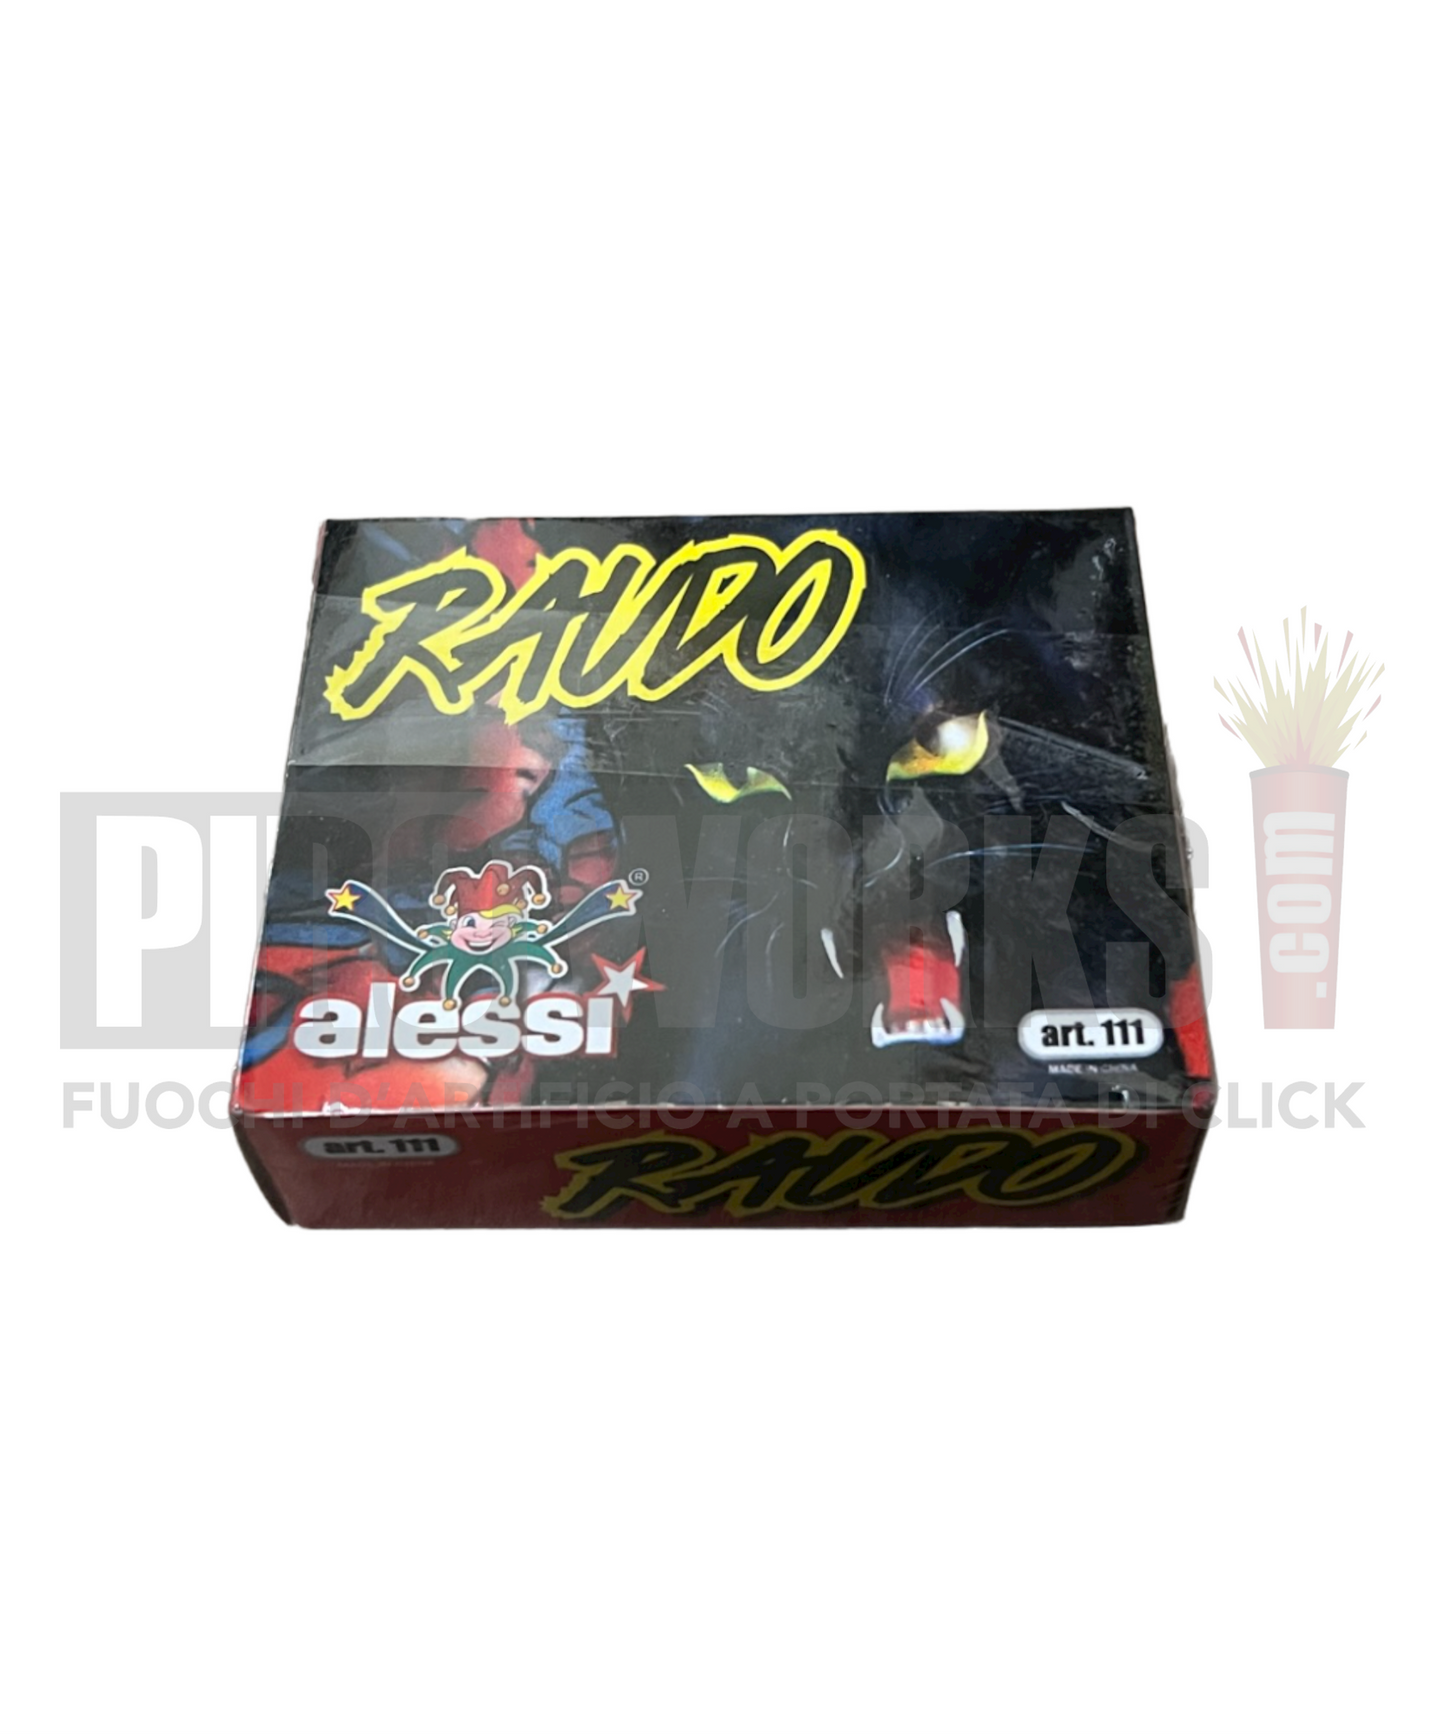 Raudo Alessi – Piroworks